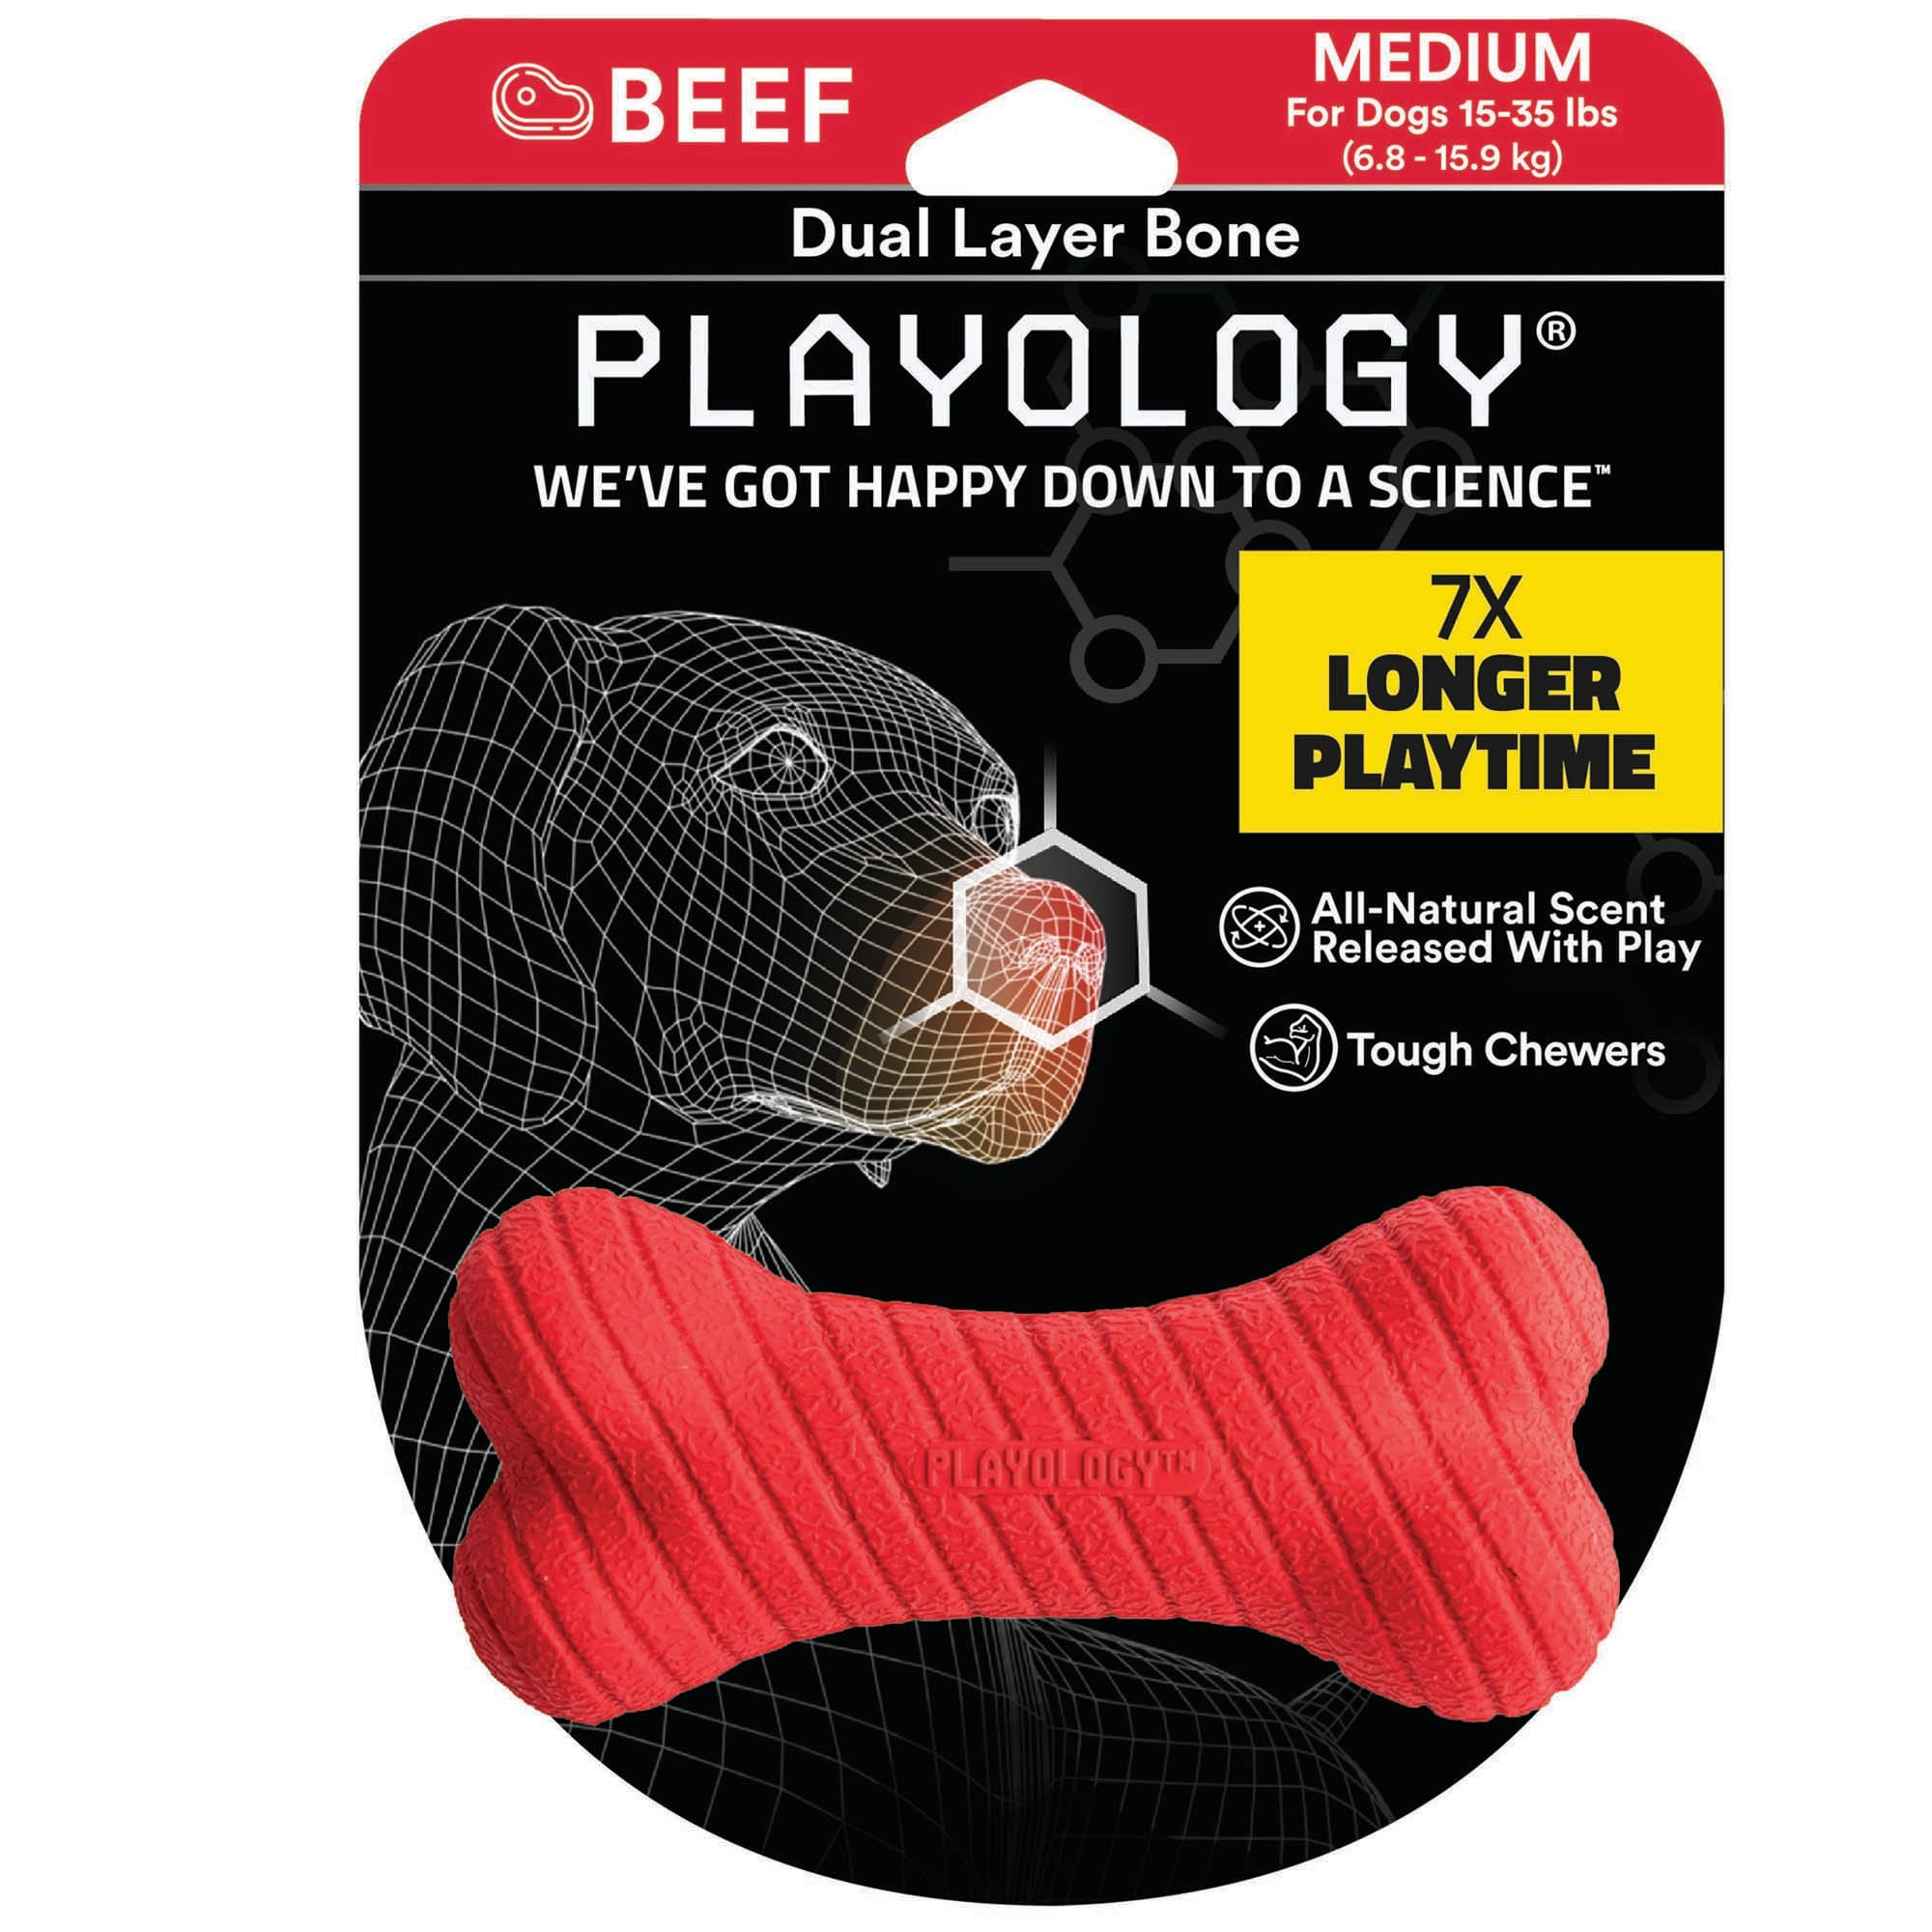 Playology Dual Layer Bone Dog Toy Beef 